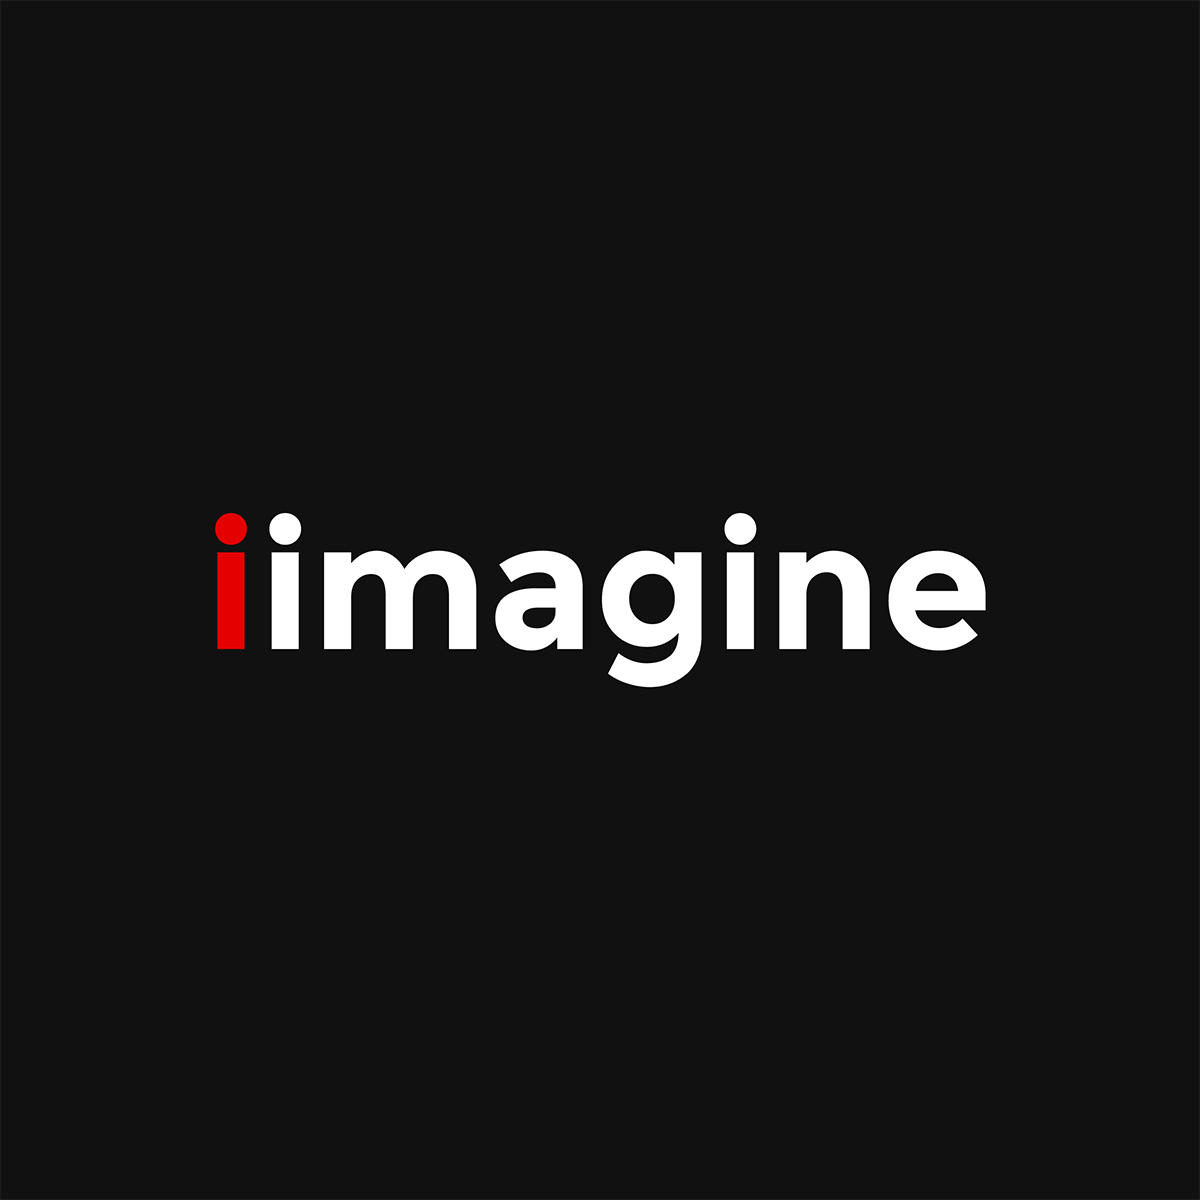 iimagine logo